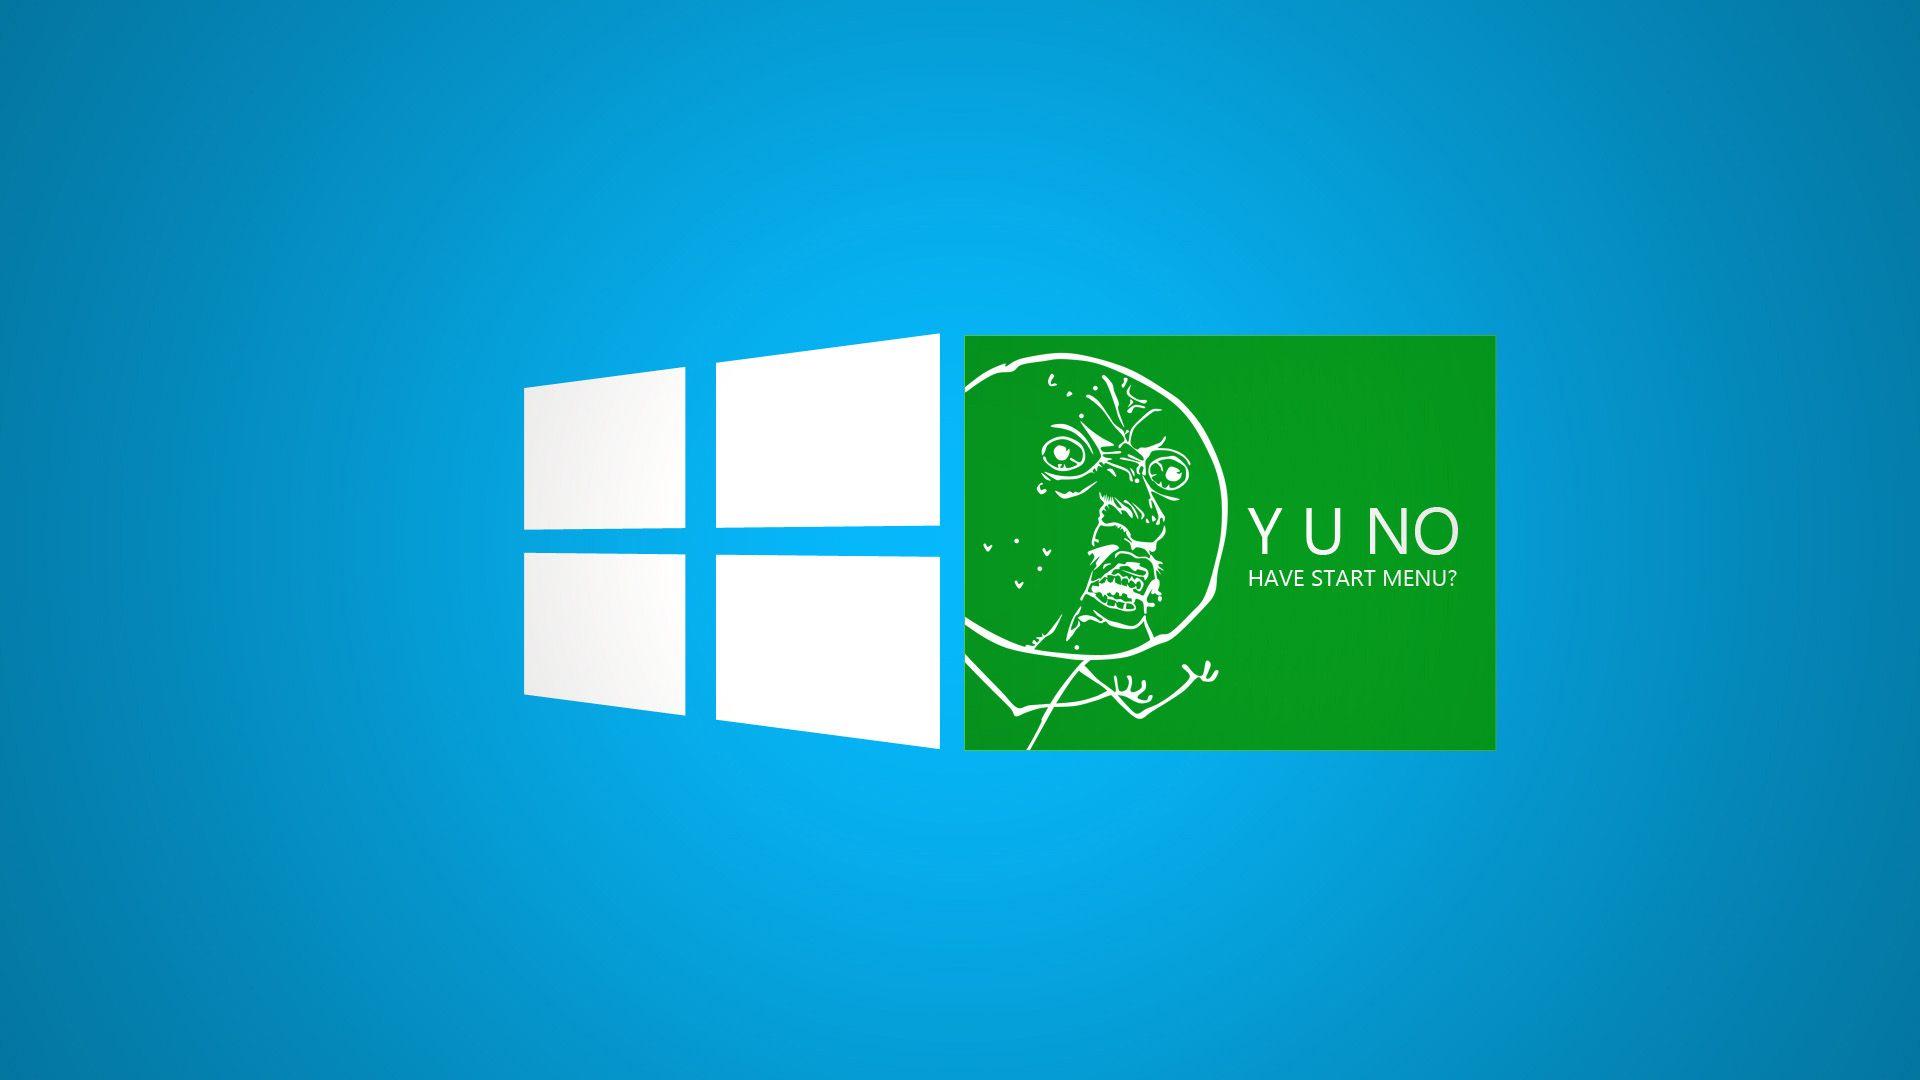 Funny Green Windows 8 Meme wallpaper. brands and logos. Wallpaper